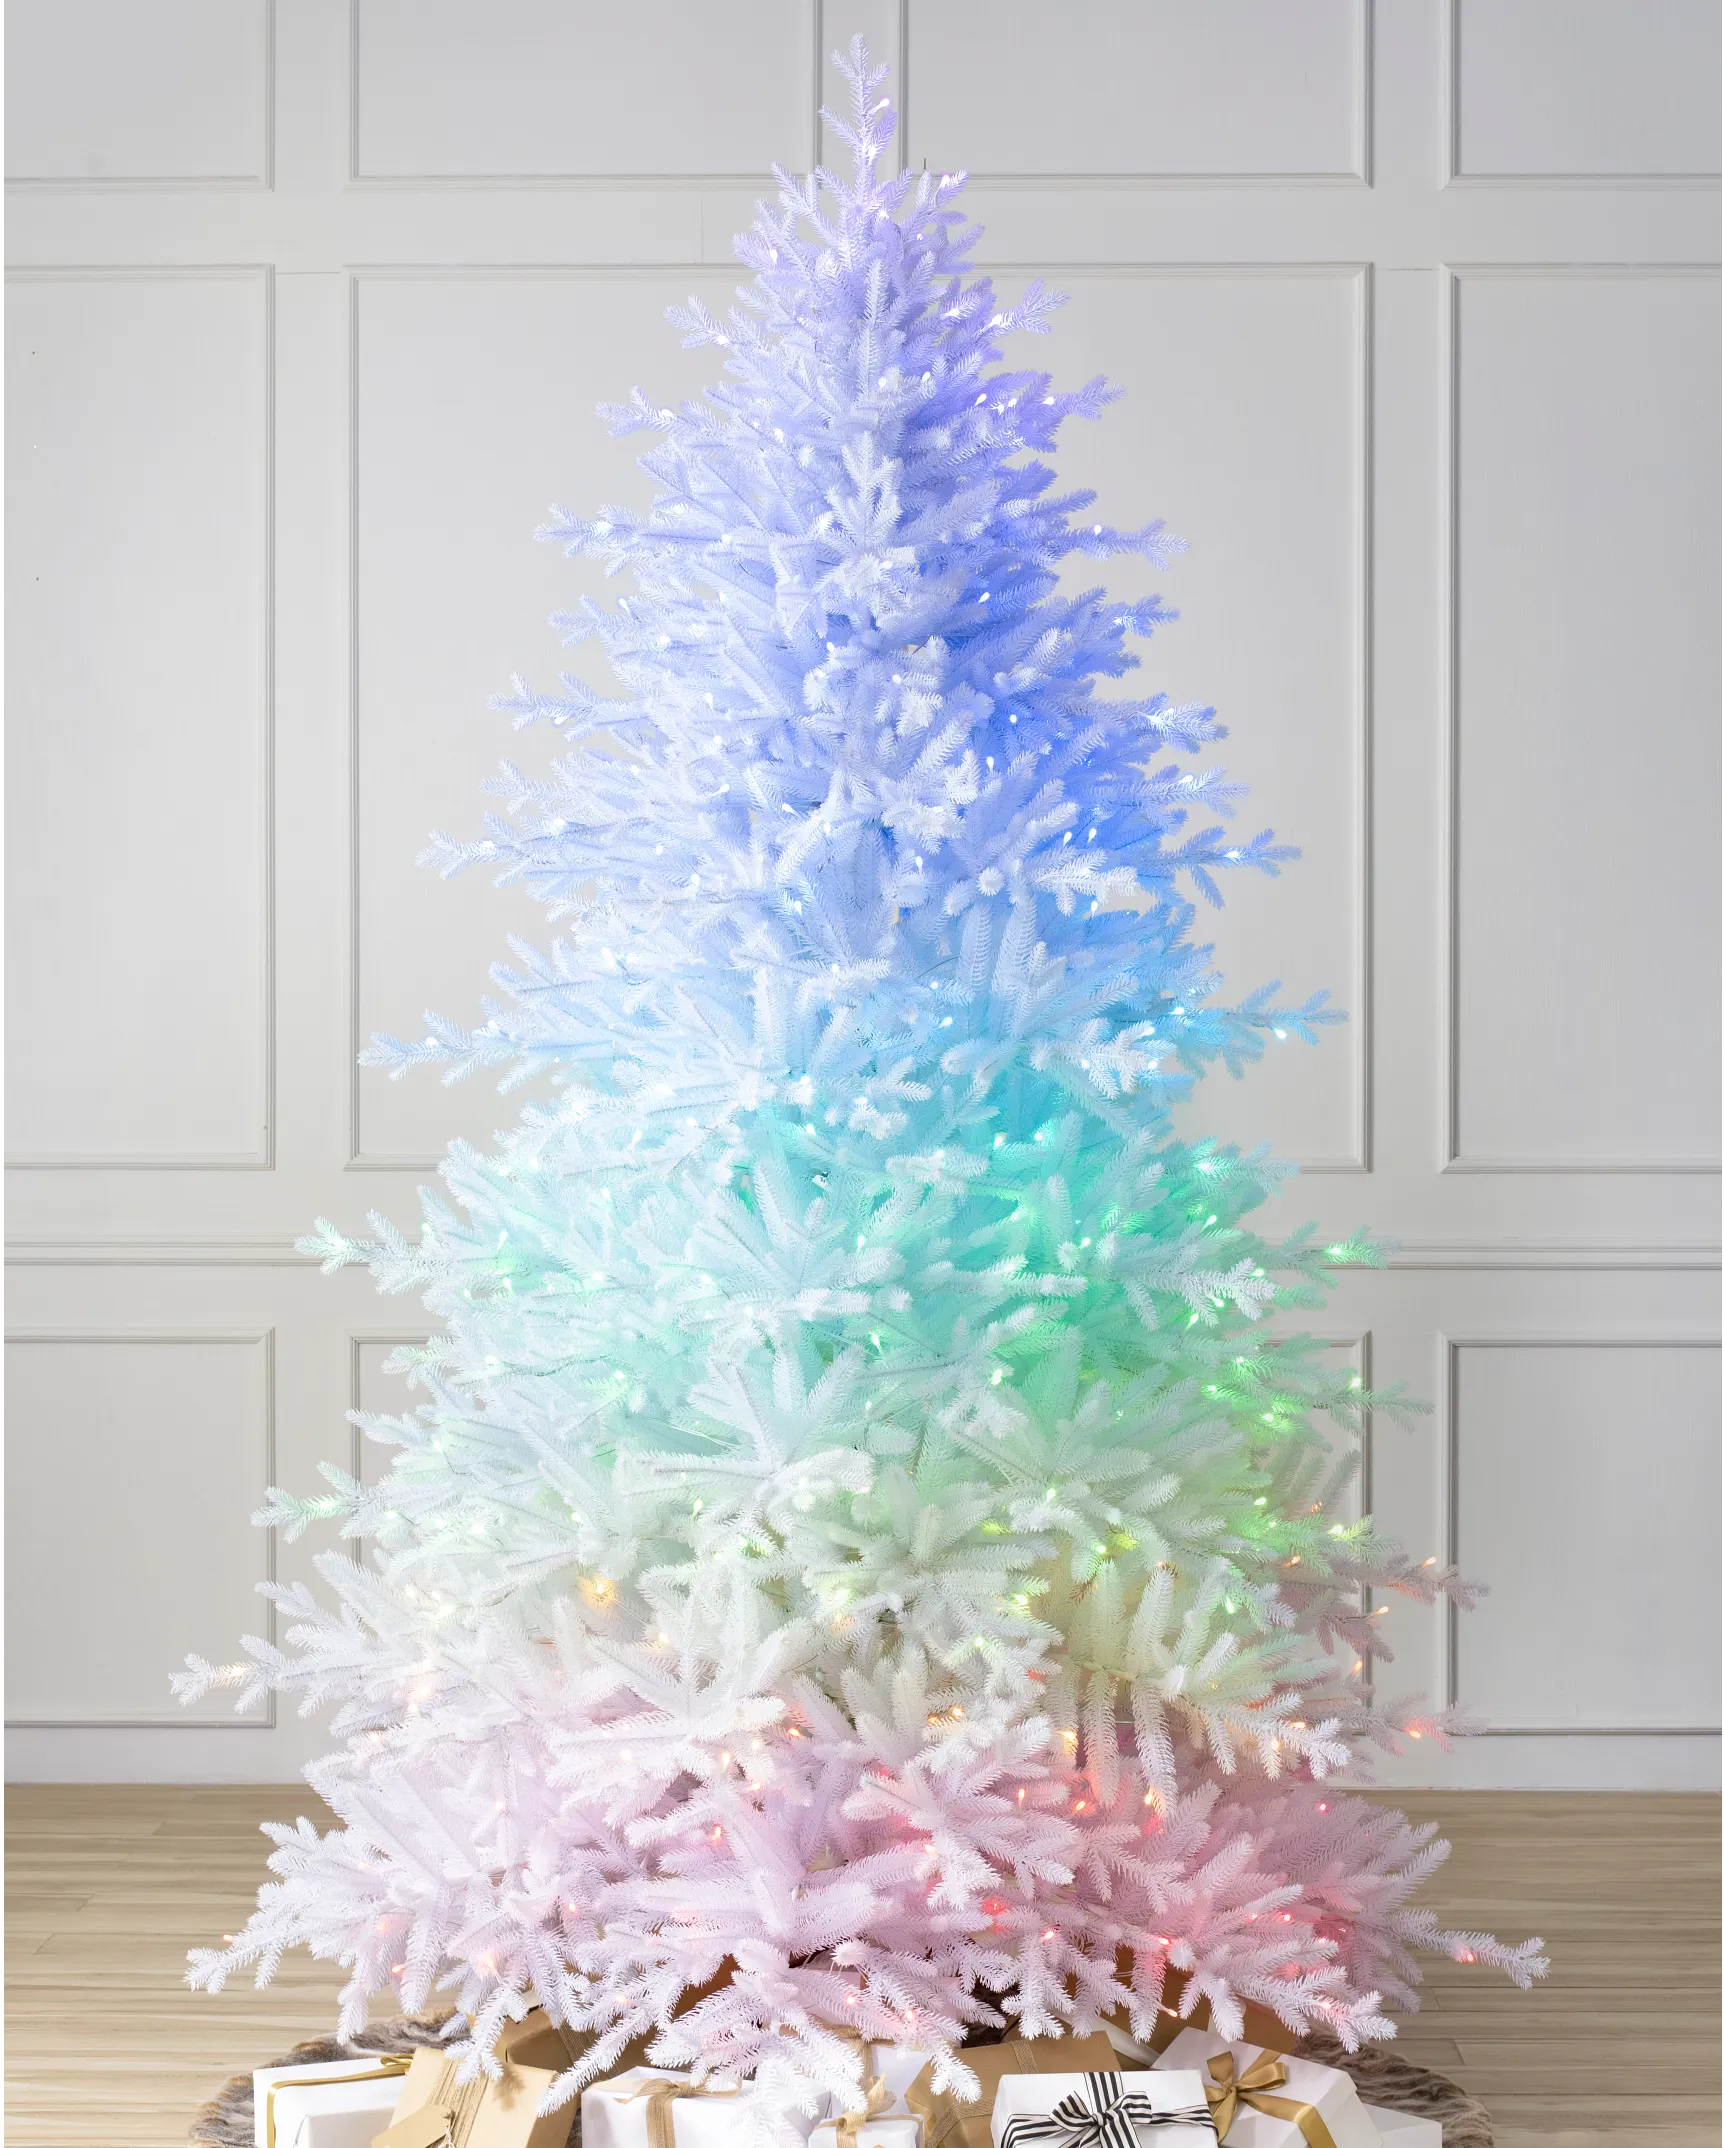 https://source.widen.net/content/kpjmlvzsge/webp/WEP-T_Denali-White-Christmas-Tree_Twinkly_SSC.webp?position=c&color=ffffffff&quality=80&u=7mzq6p&w=862&h=1074&retina=true